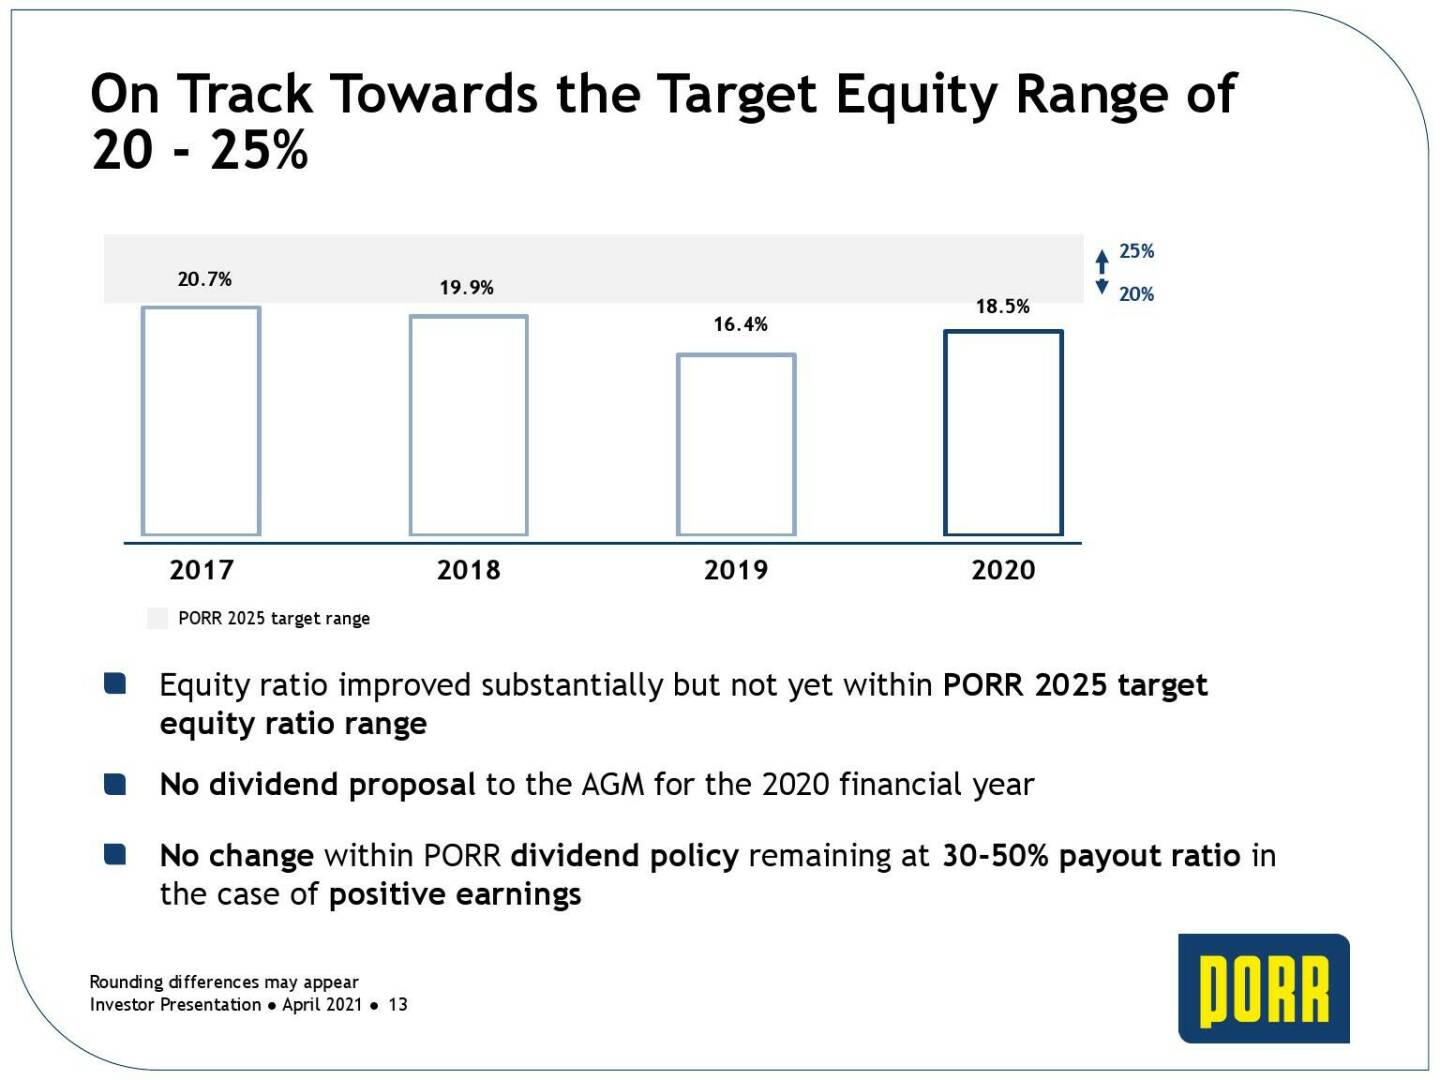 Porr - On track towards the target equity range of 20-25%